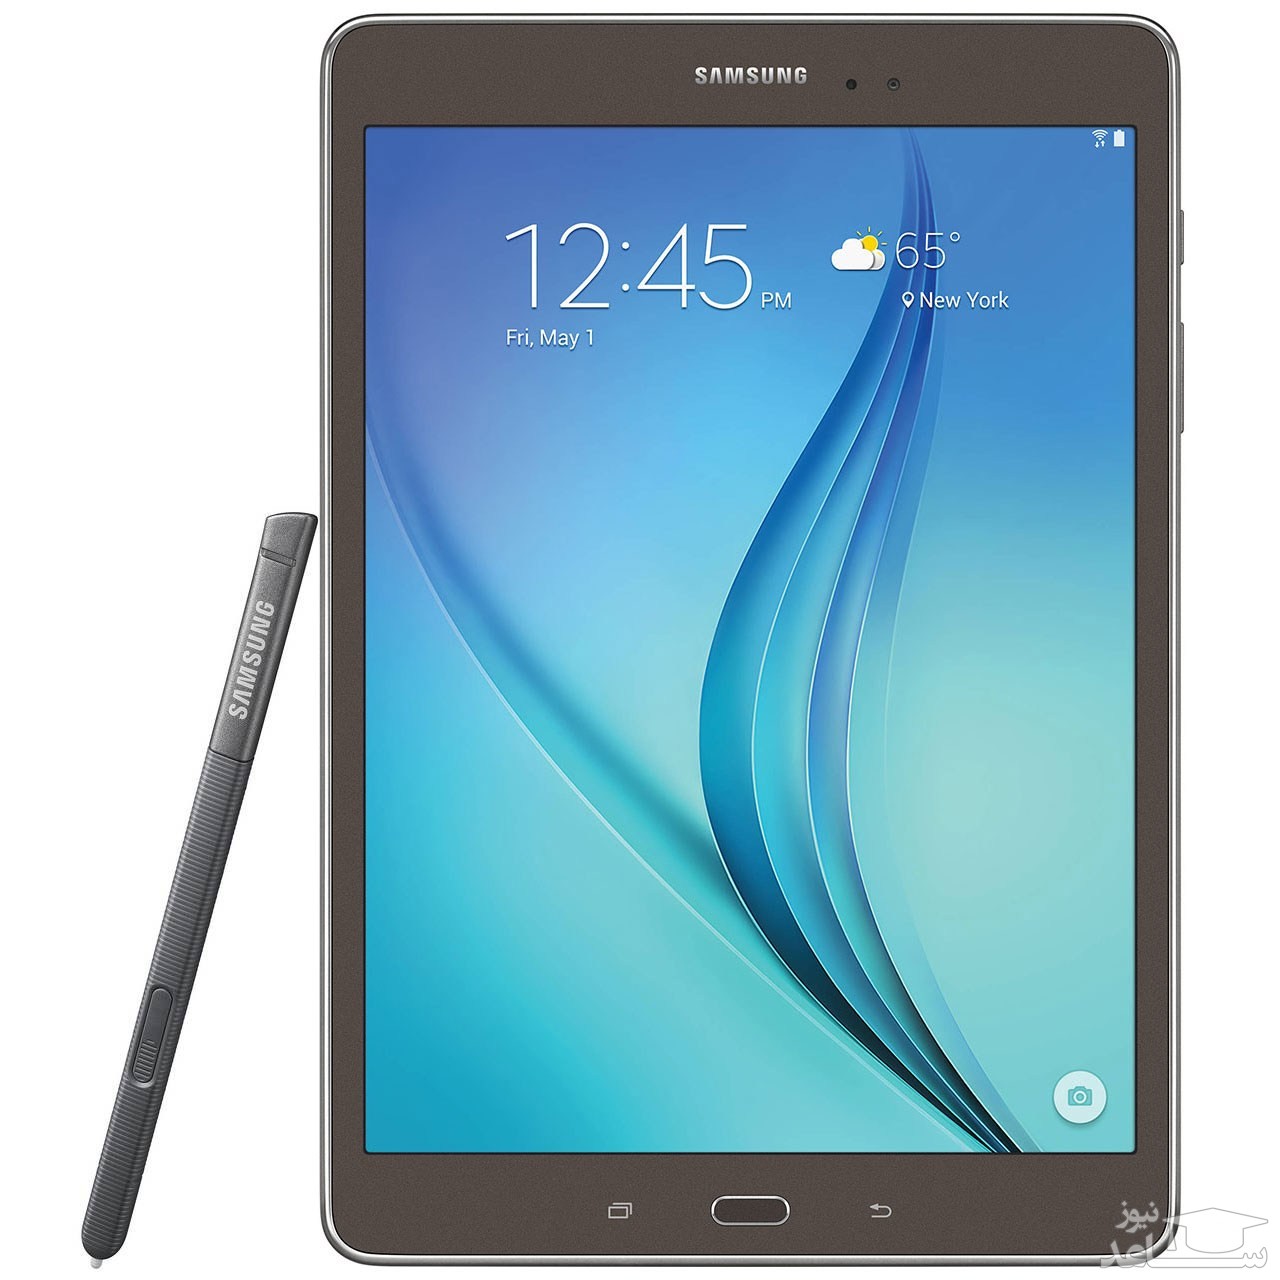 قیمت تبلت سامسونگ گلکسی ای 9.7 پی 555 - SAMSUNG Galaxy Tab A 9.7 4G SM- P555